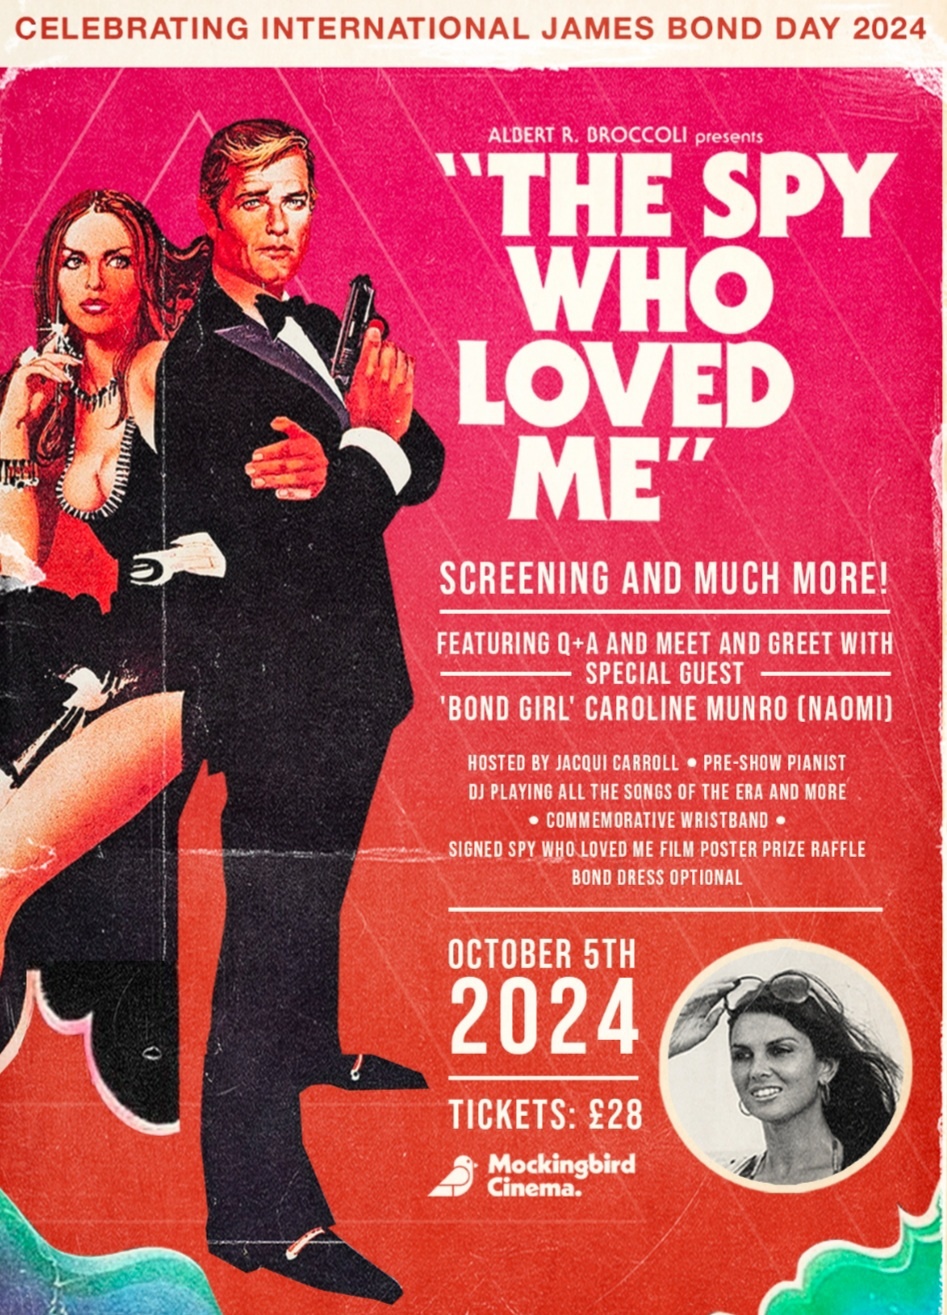 International James Bond Day 2024 Birmingham - SWLM + Caroline Munro ...